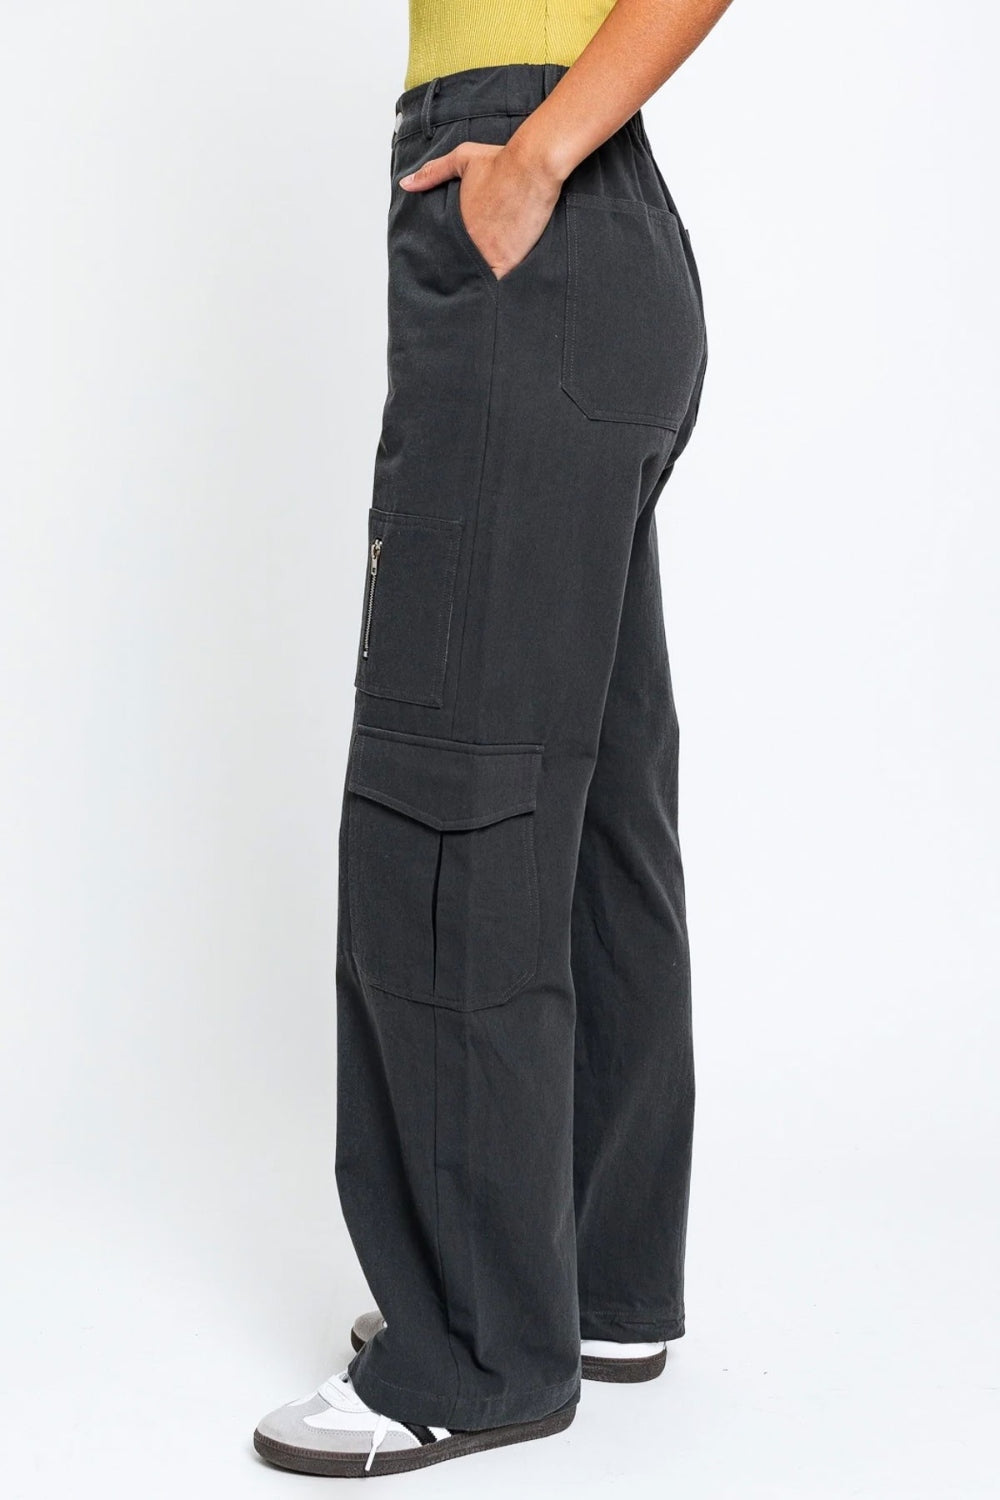 Tasha Apparel Pantalon cargo taille haute à jambe large avec poches